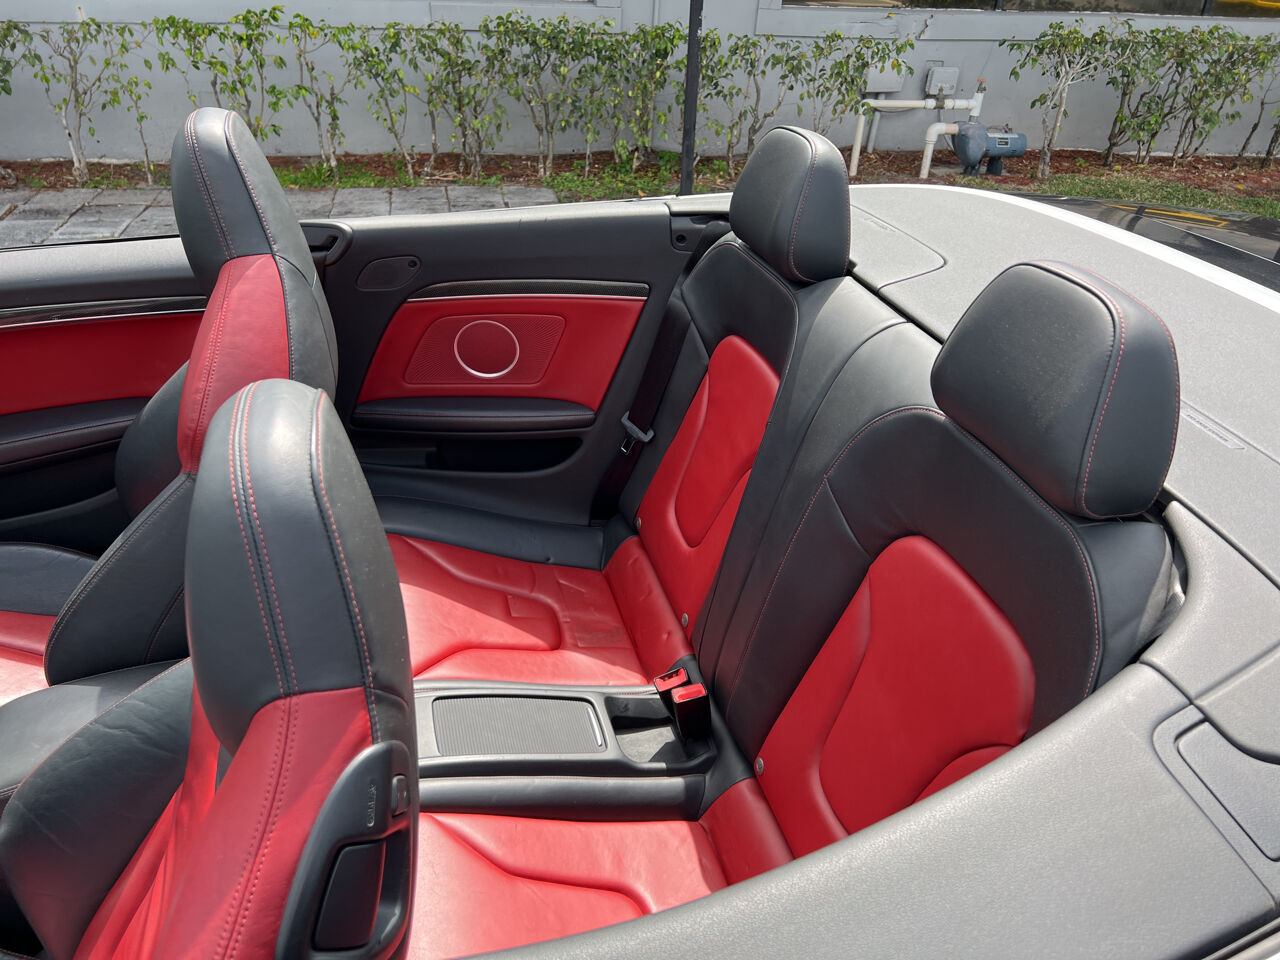 2013 AUDI S5 Convertible - $15,900